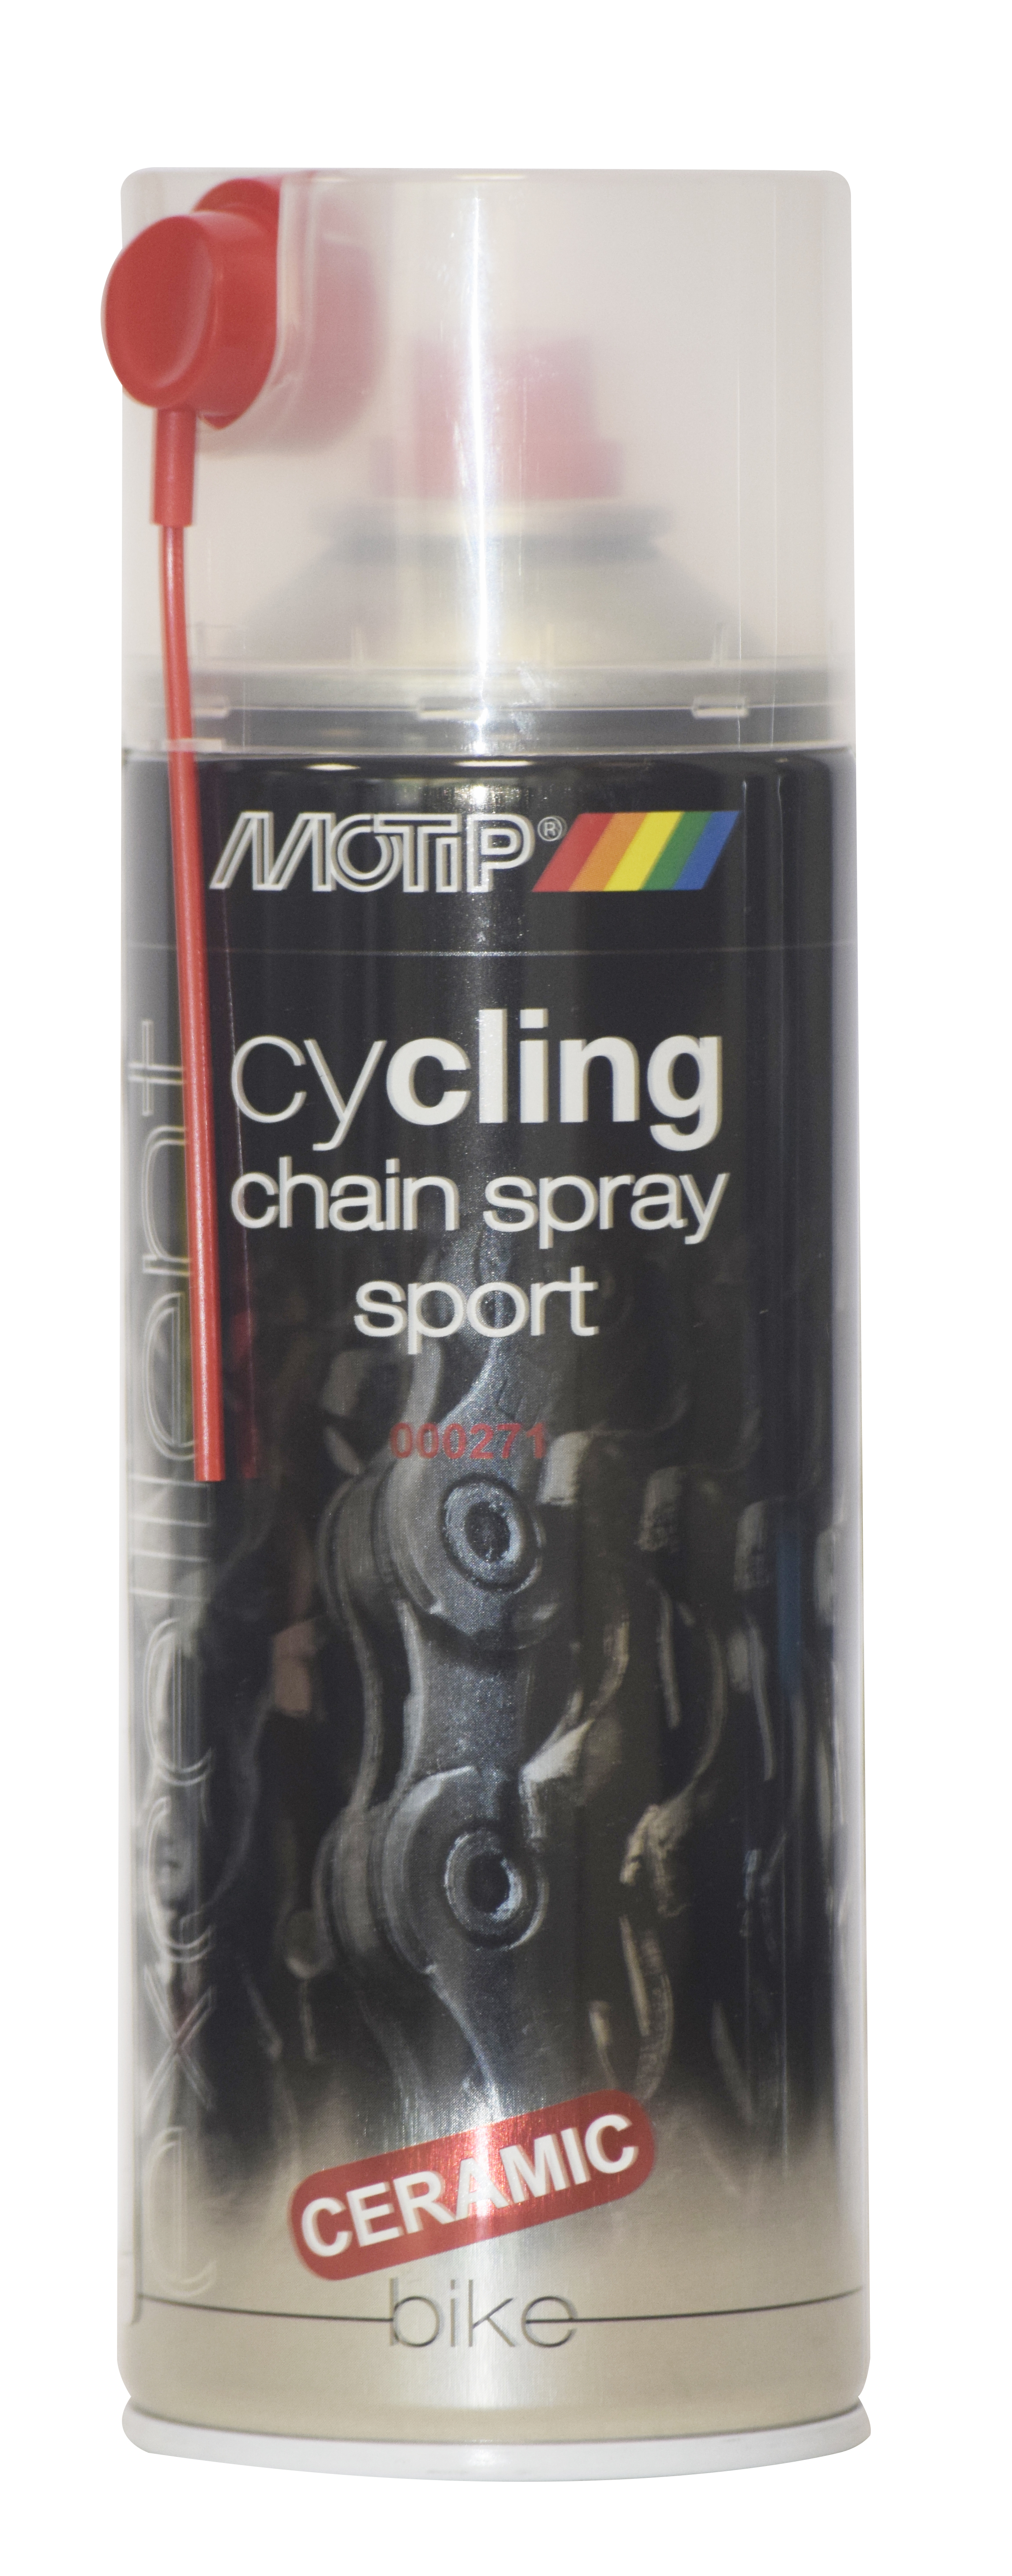 MOTIP CYCLING CERAMIC CHAIN SPRAY SPORT 400ML